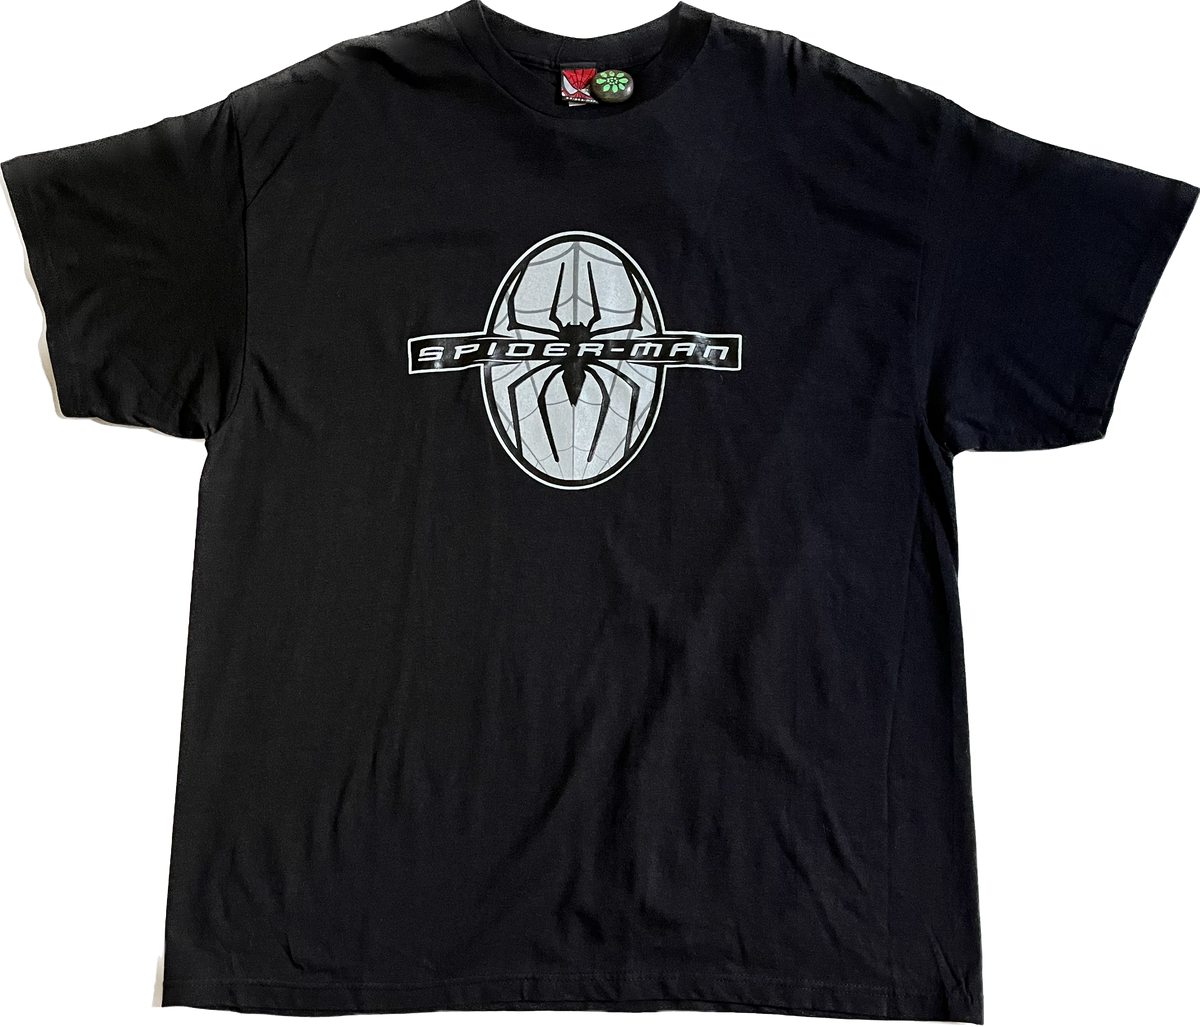 Vintage '02 Spider-Man Logo Black Graphic Tee Deadstock